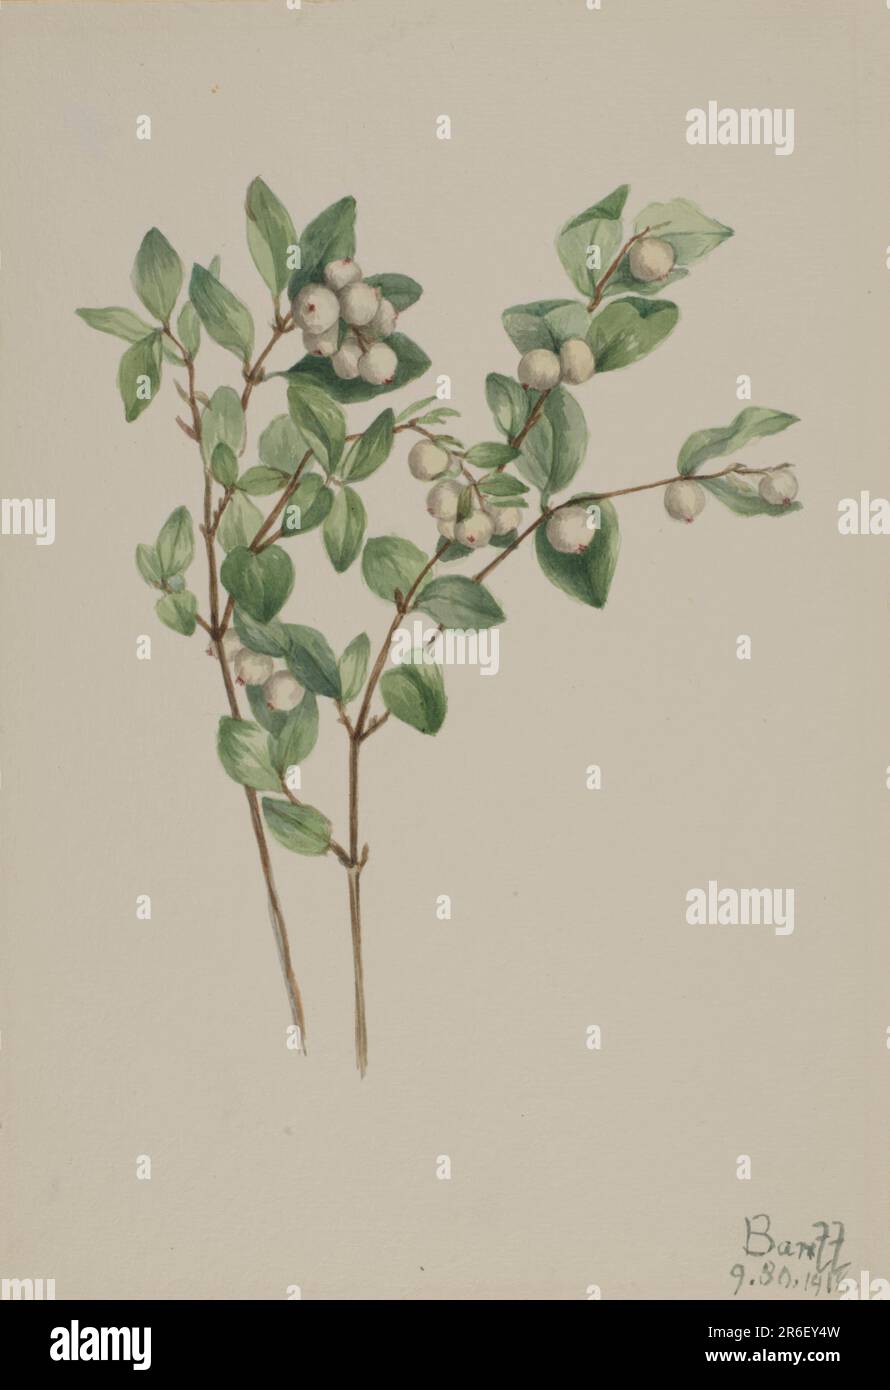 Snowberry (Symphoricarpos albus). Date: 1918. Watercolor on paper. Museum: Smithsonian American Art Museum. Stock Photo